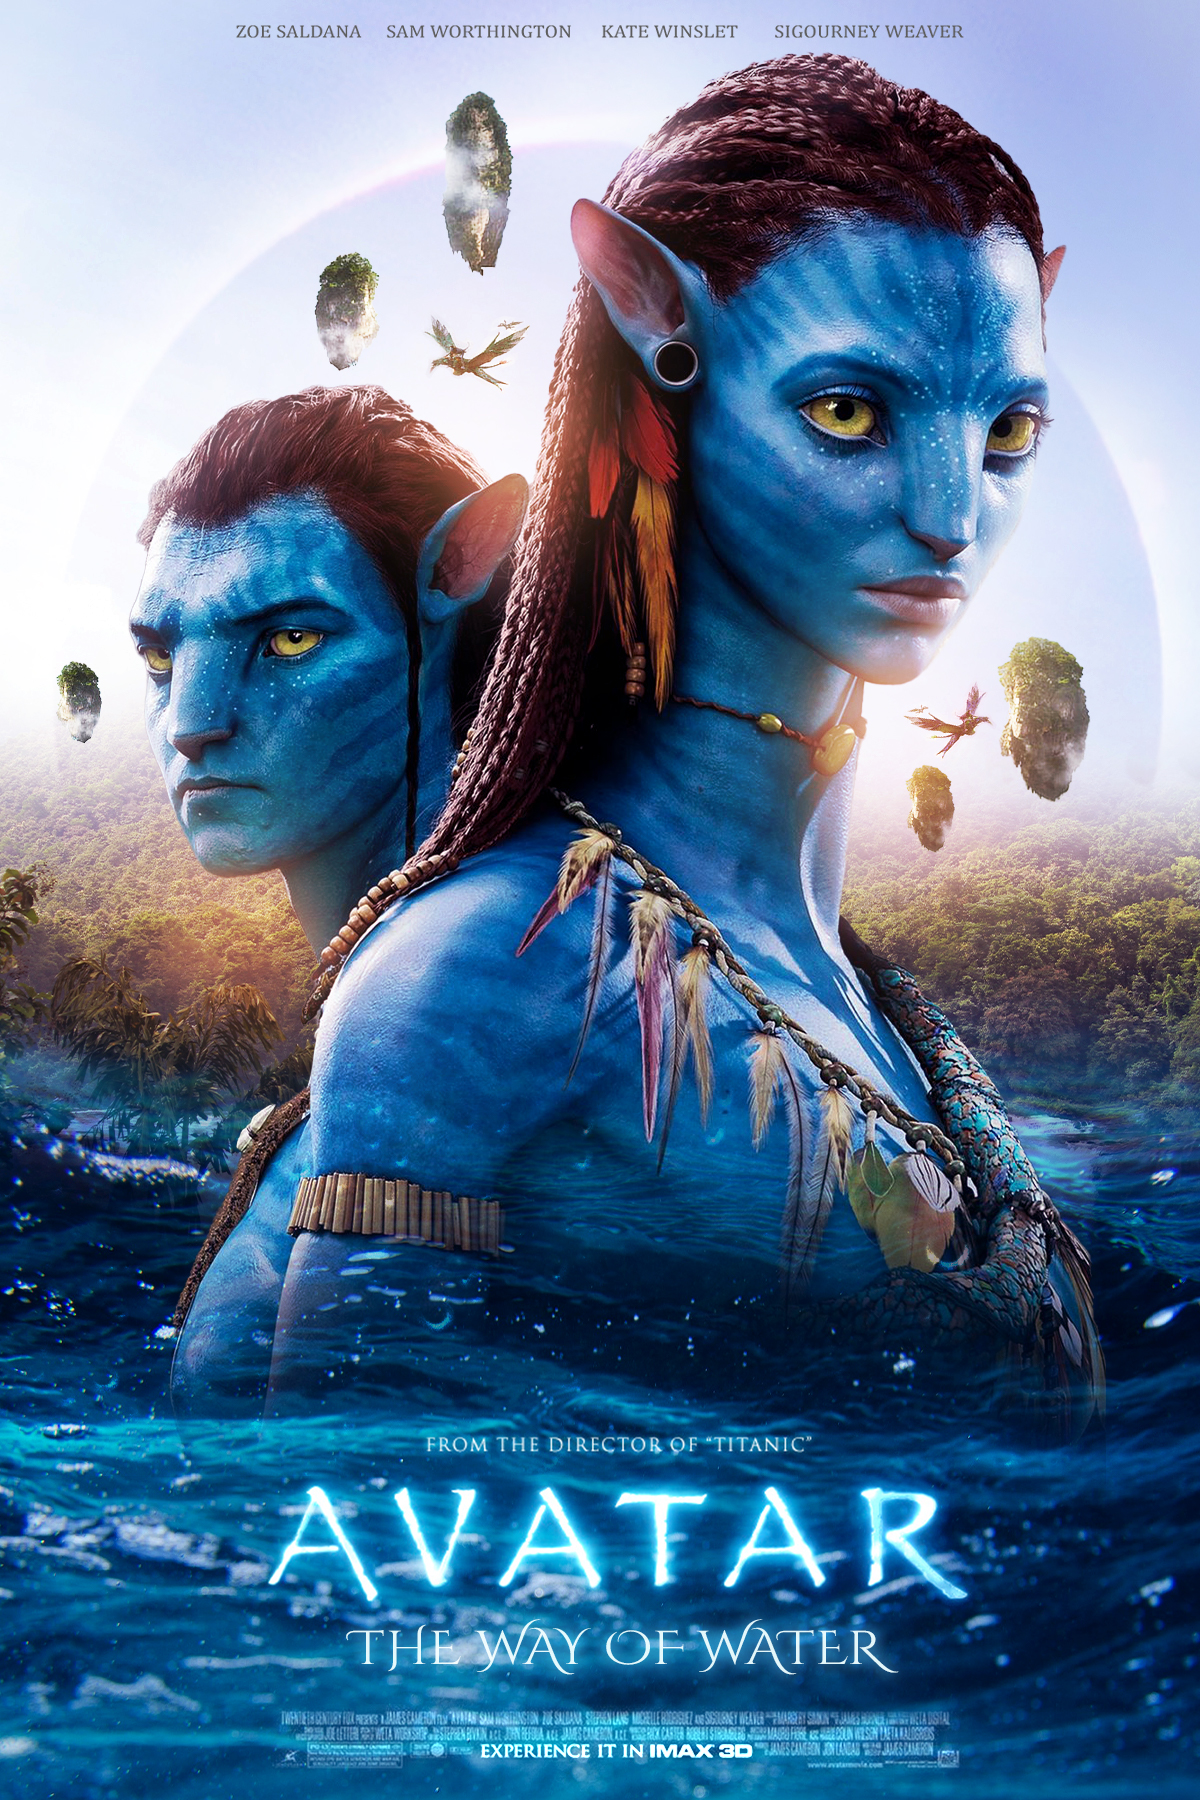 Stiahni si 3D Filmy Avatar: Cesta vody / Avatar The Way of Water (2022)[3D HalfOU][RUS,UKR,EN] = CSFD 80%